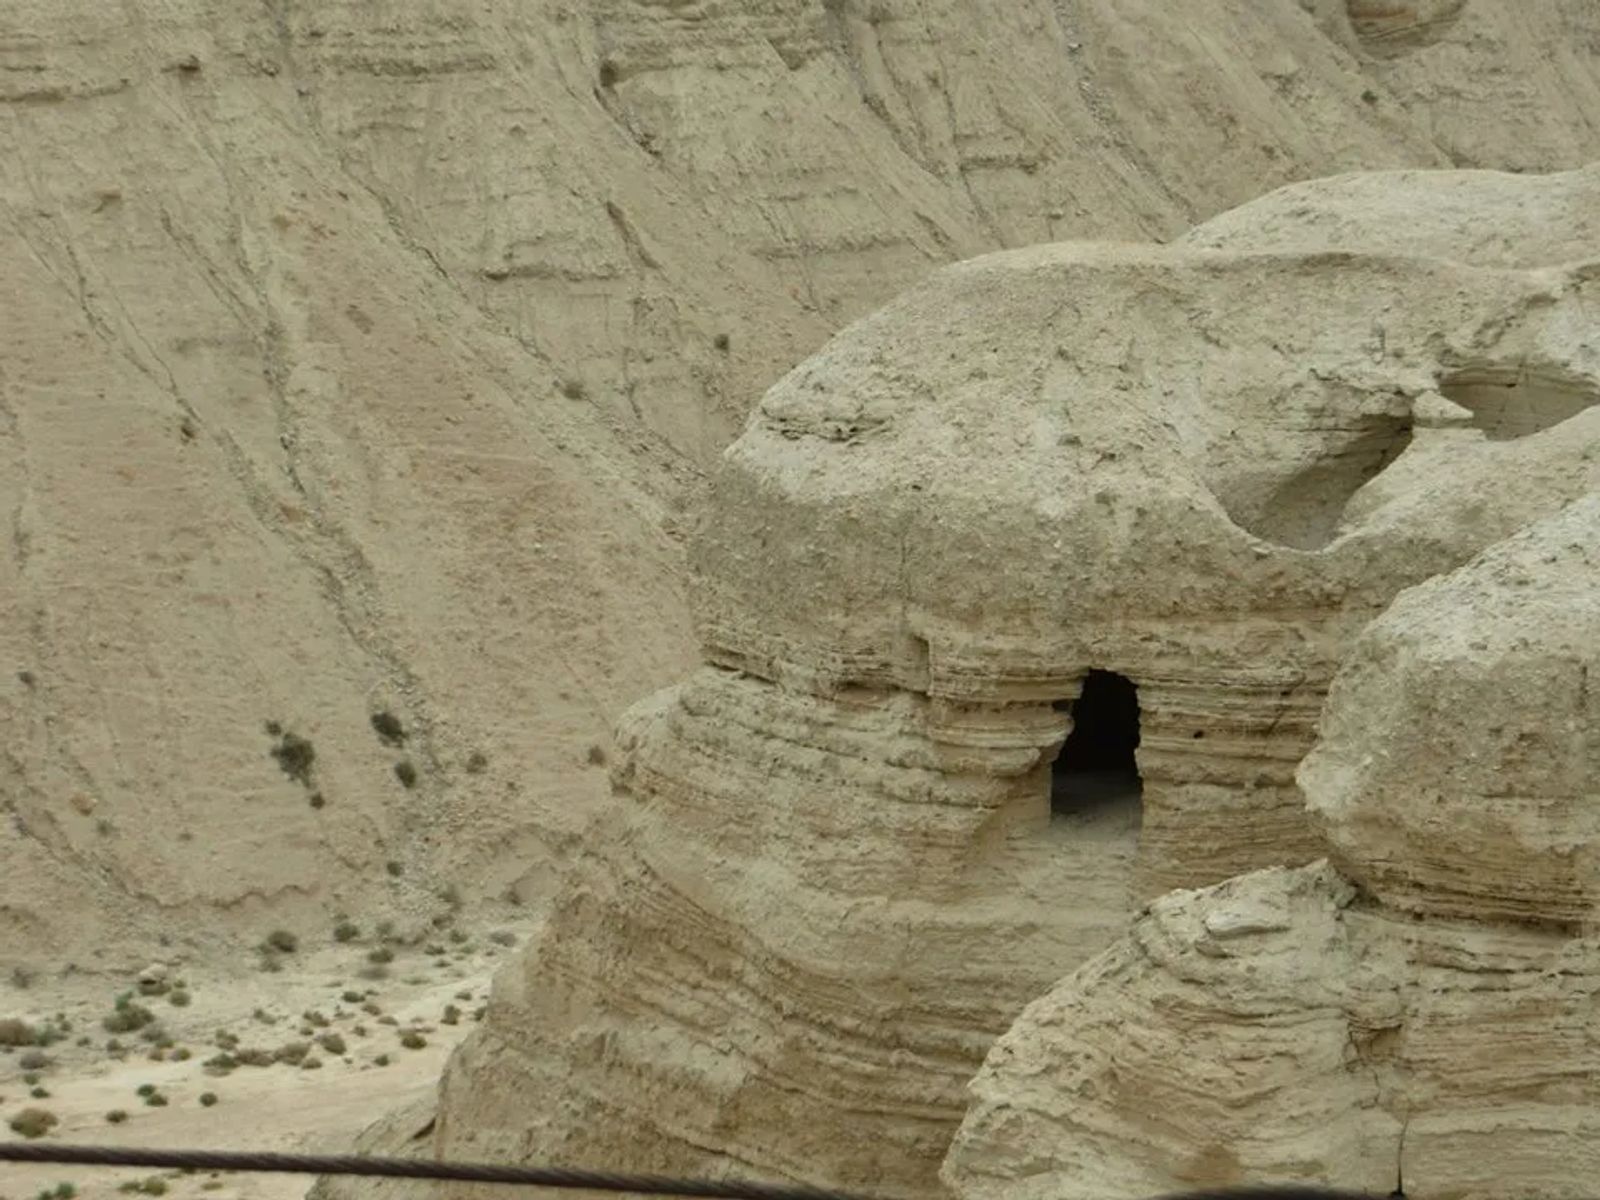 qumran limestone caves